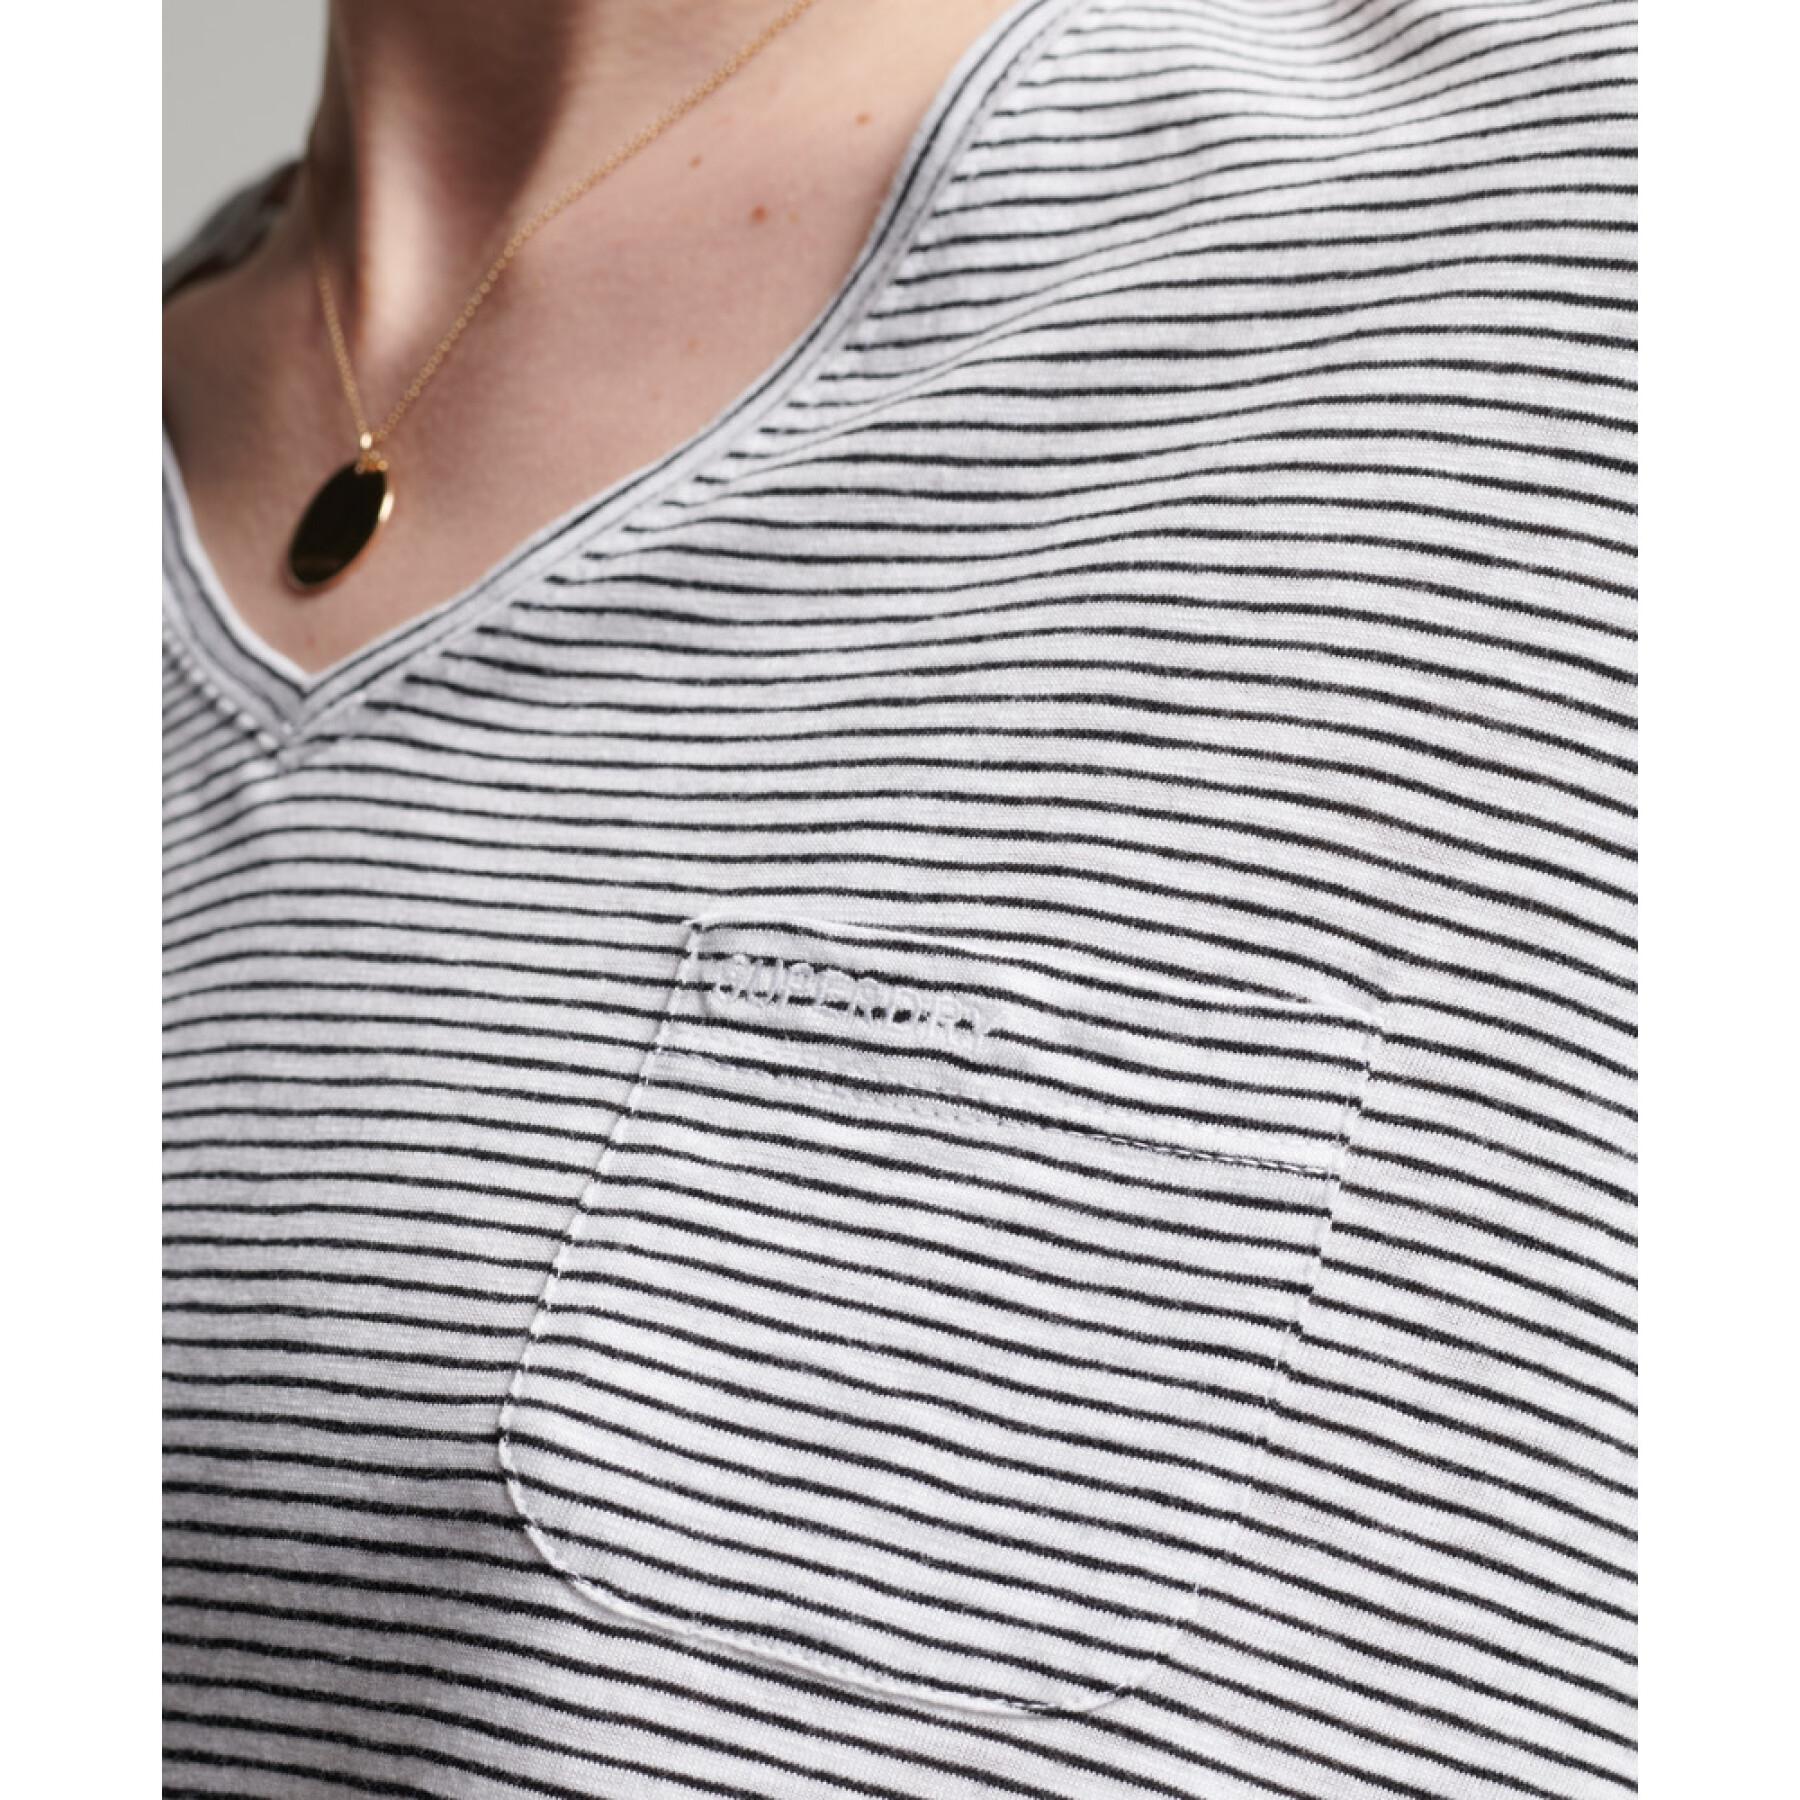 T-shirt à col v et poche poitrine coton bio fille Superdry Studios